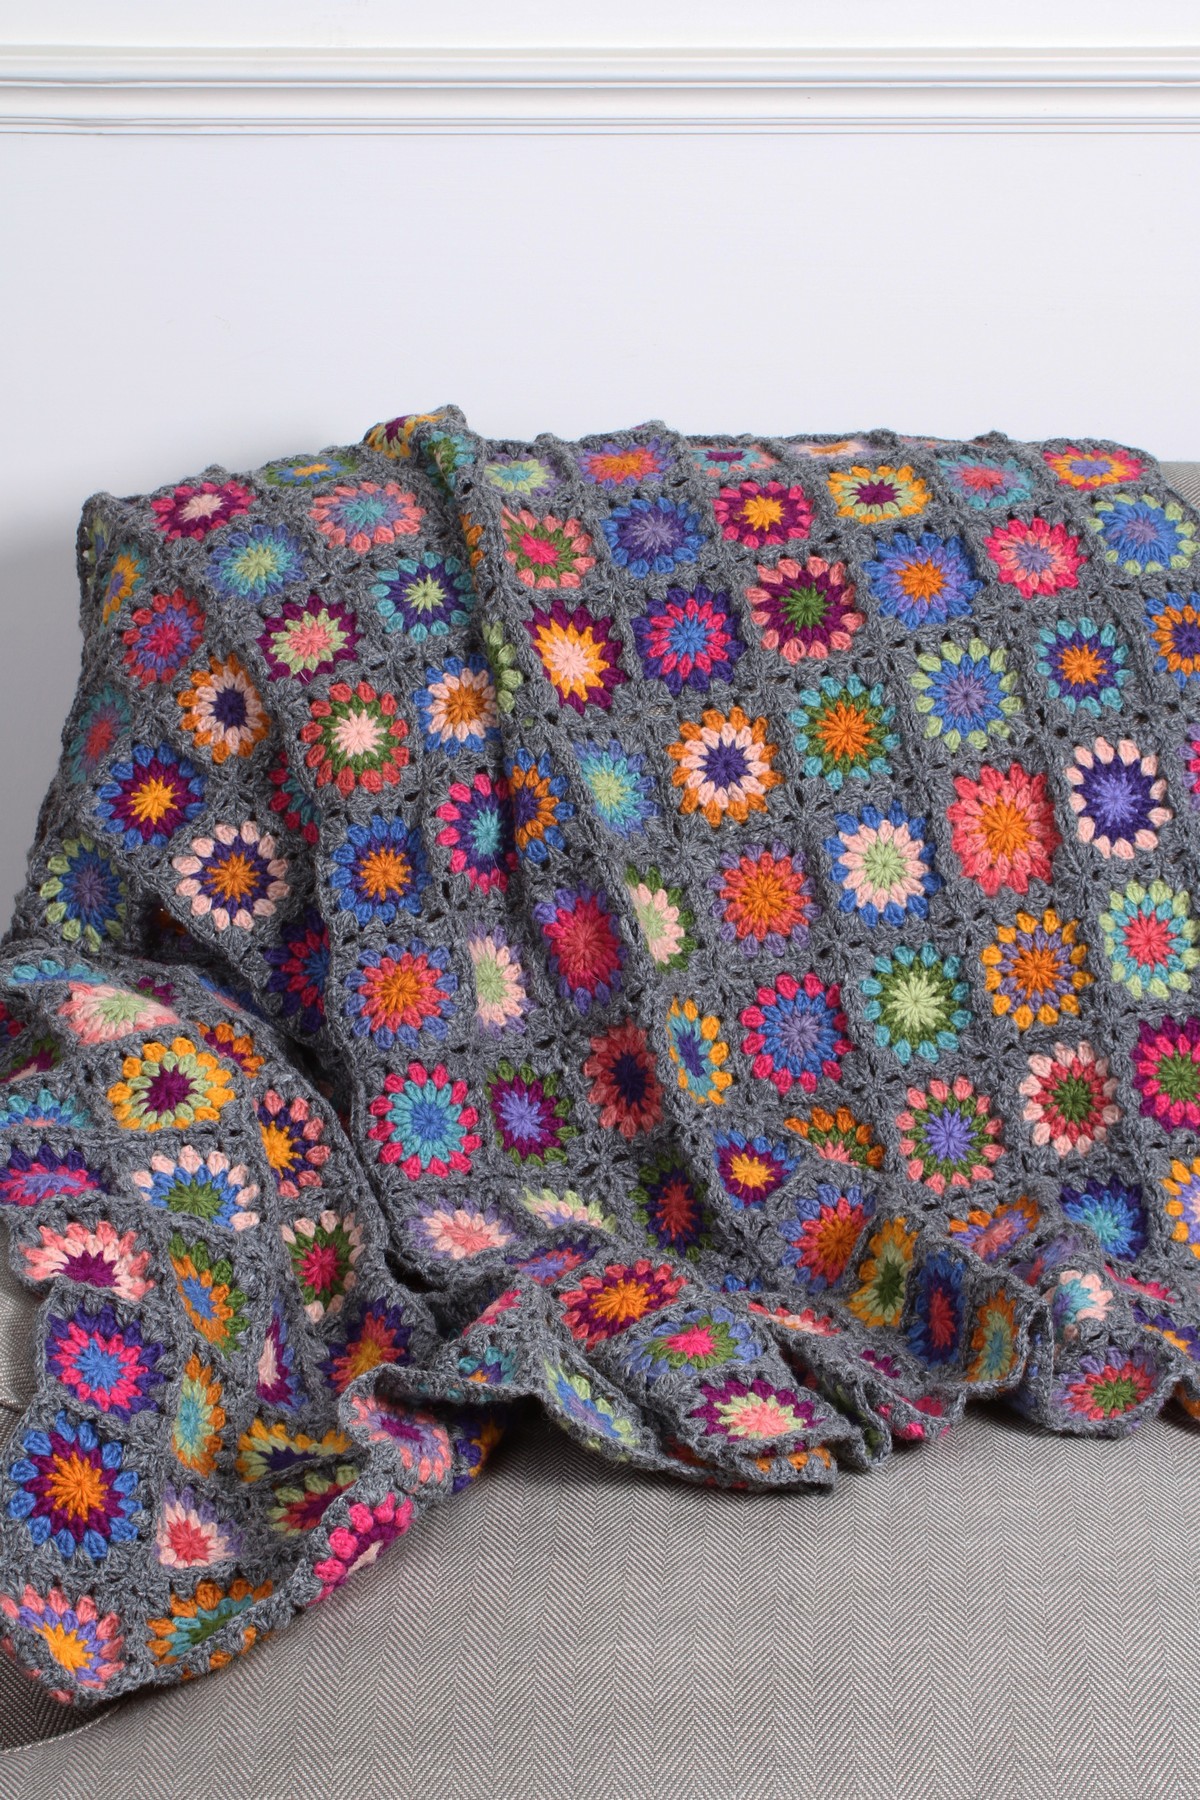 Pachamama Handmade Crochet "Granny Squares" Blanket